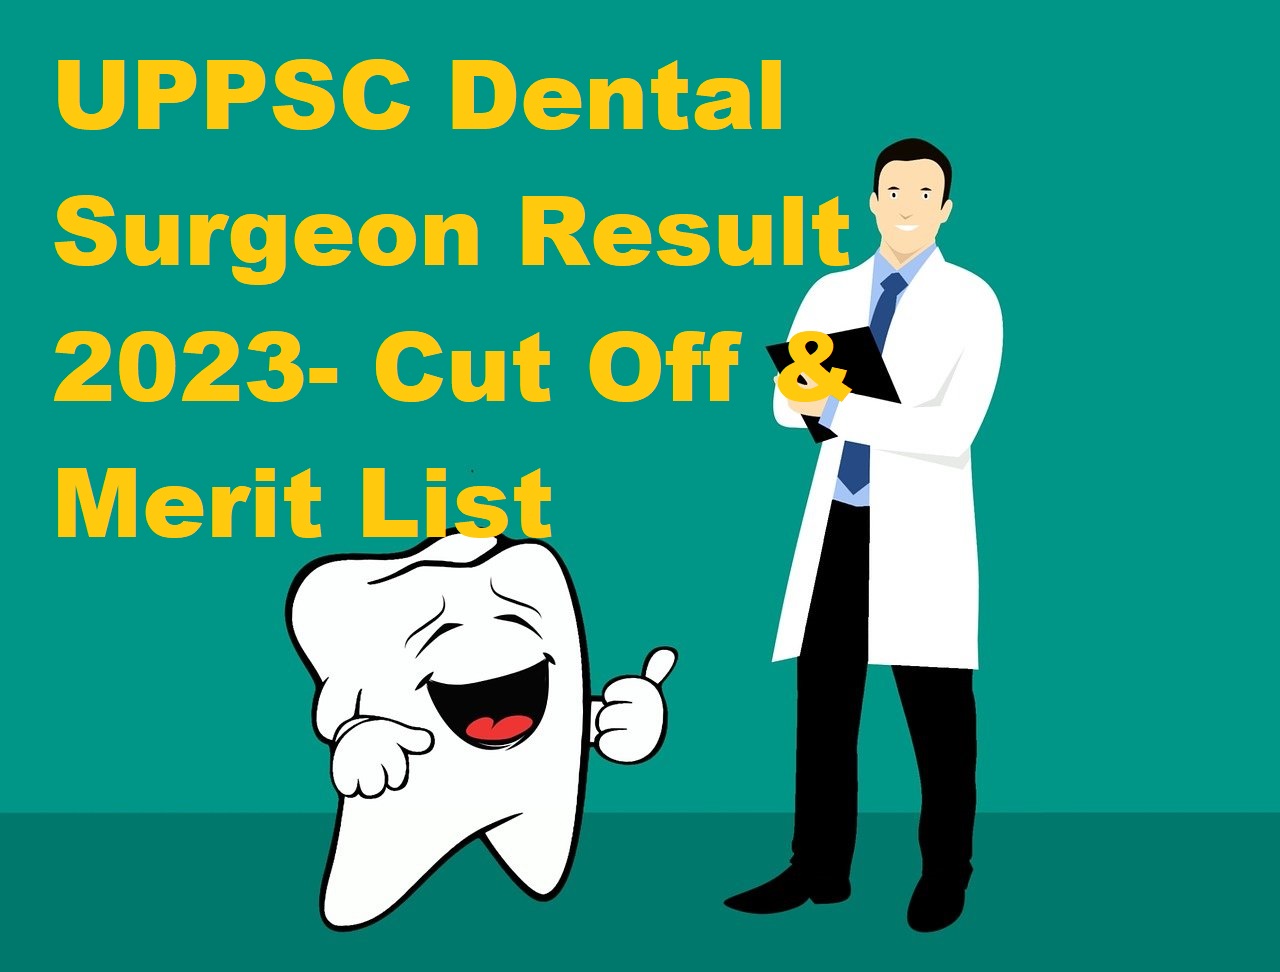 UPPSC Dental Surgeon Result